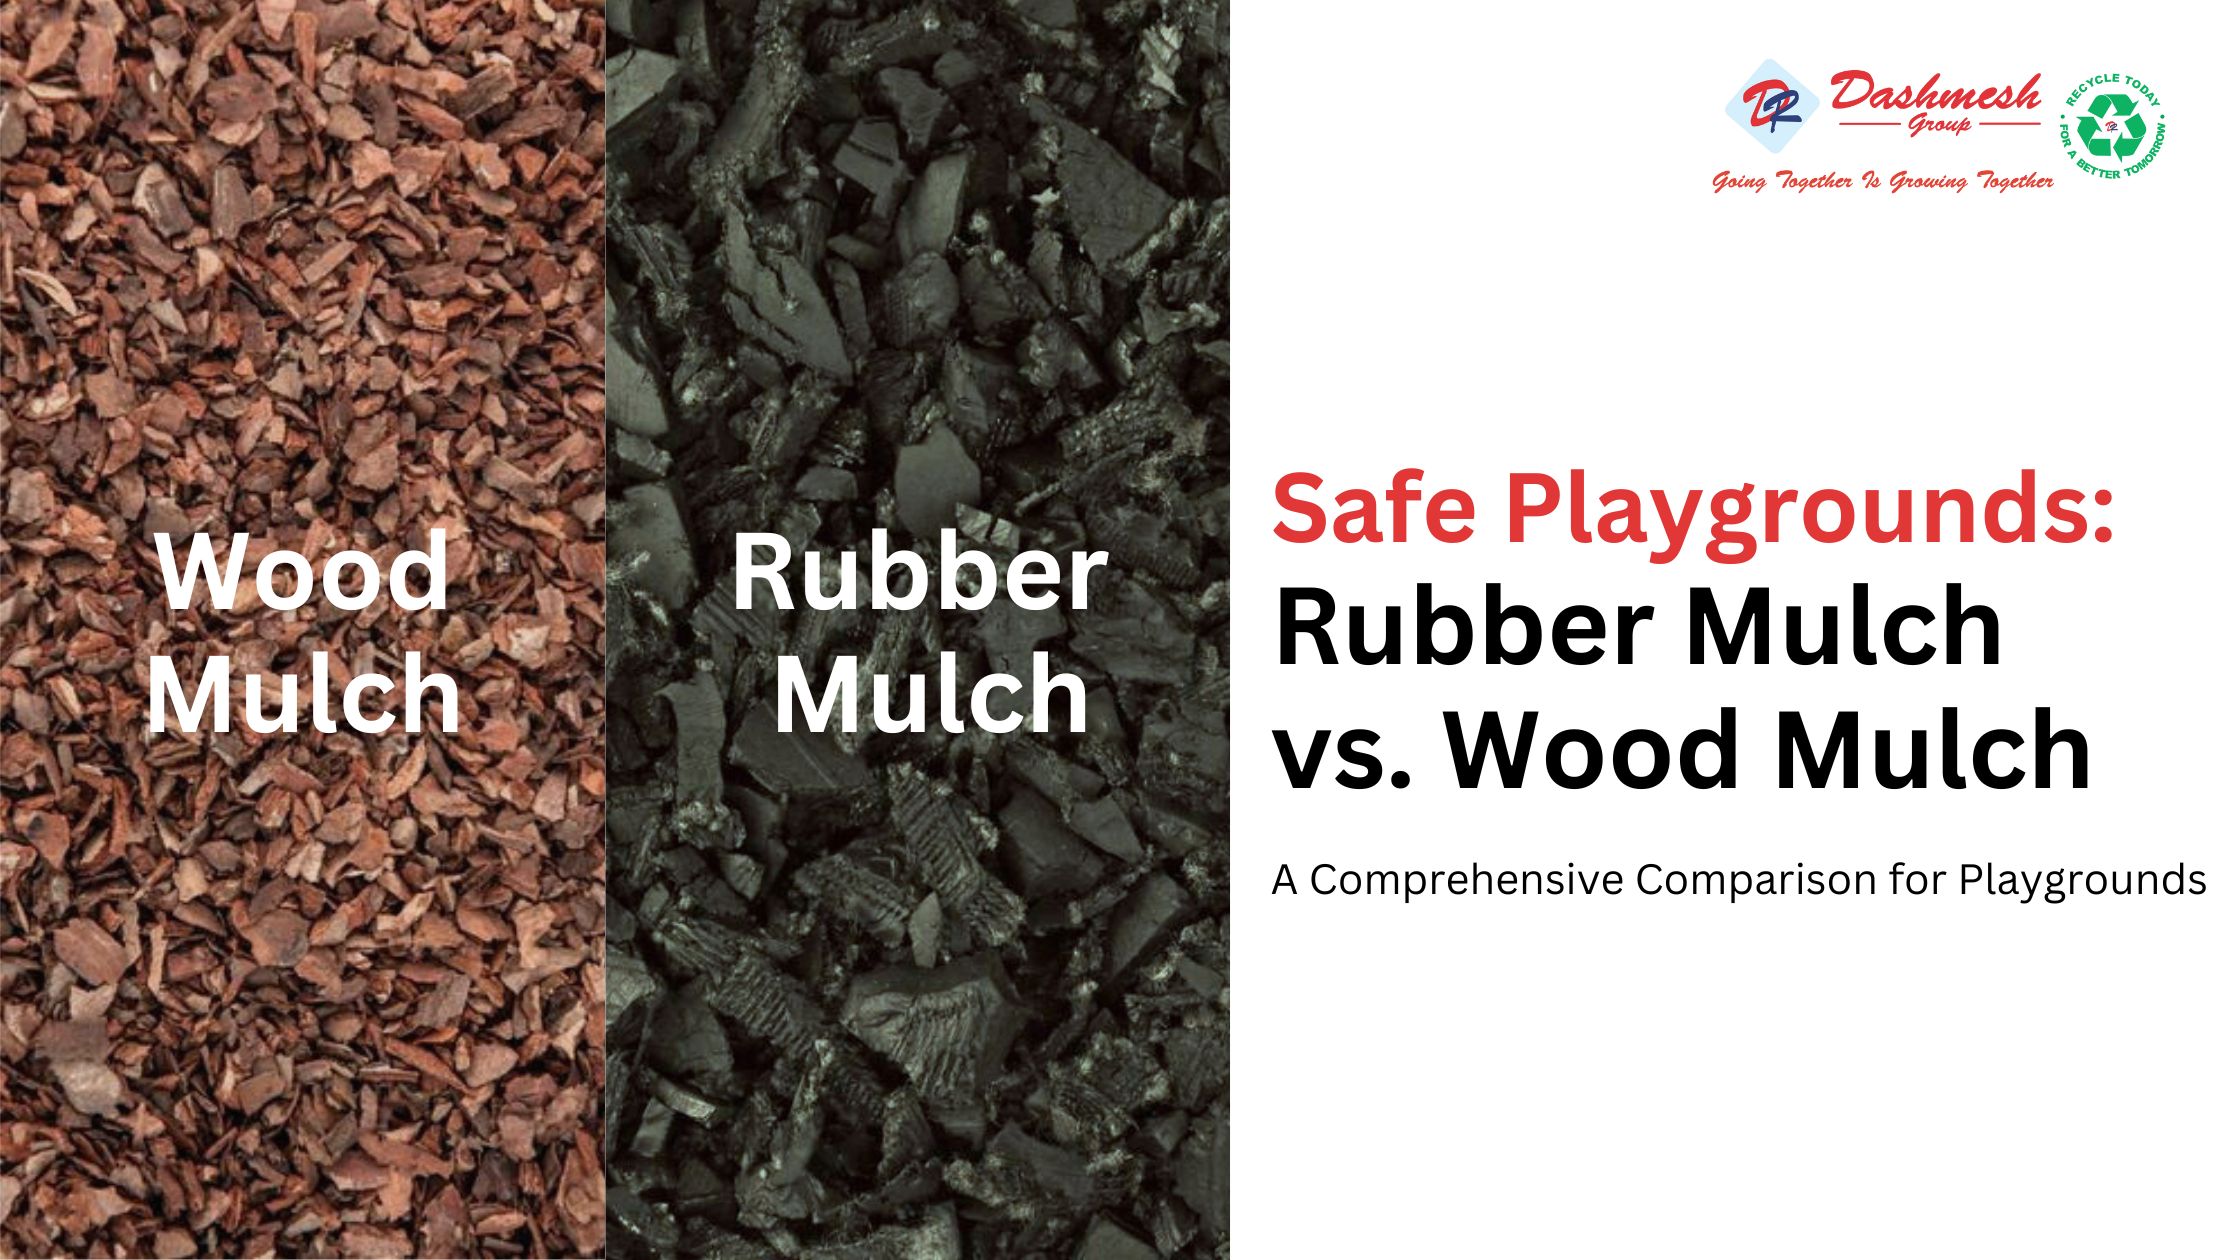 Rubber Mulch vs. Wood Mulch: A Comprehensive Comparison for Playgrounds